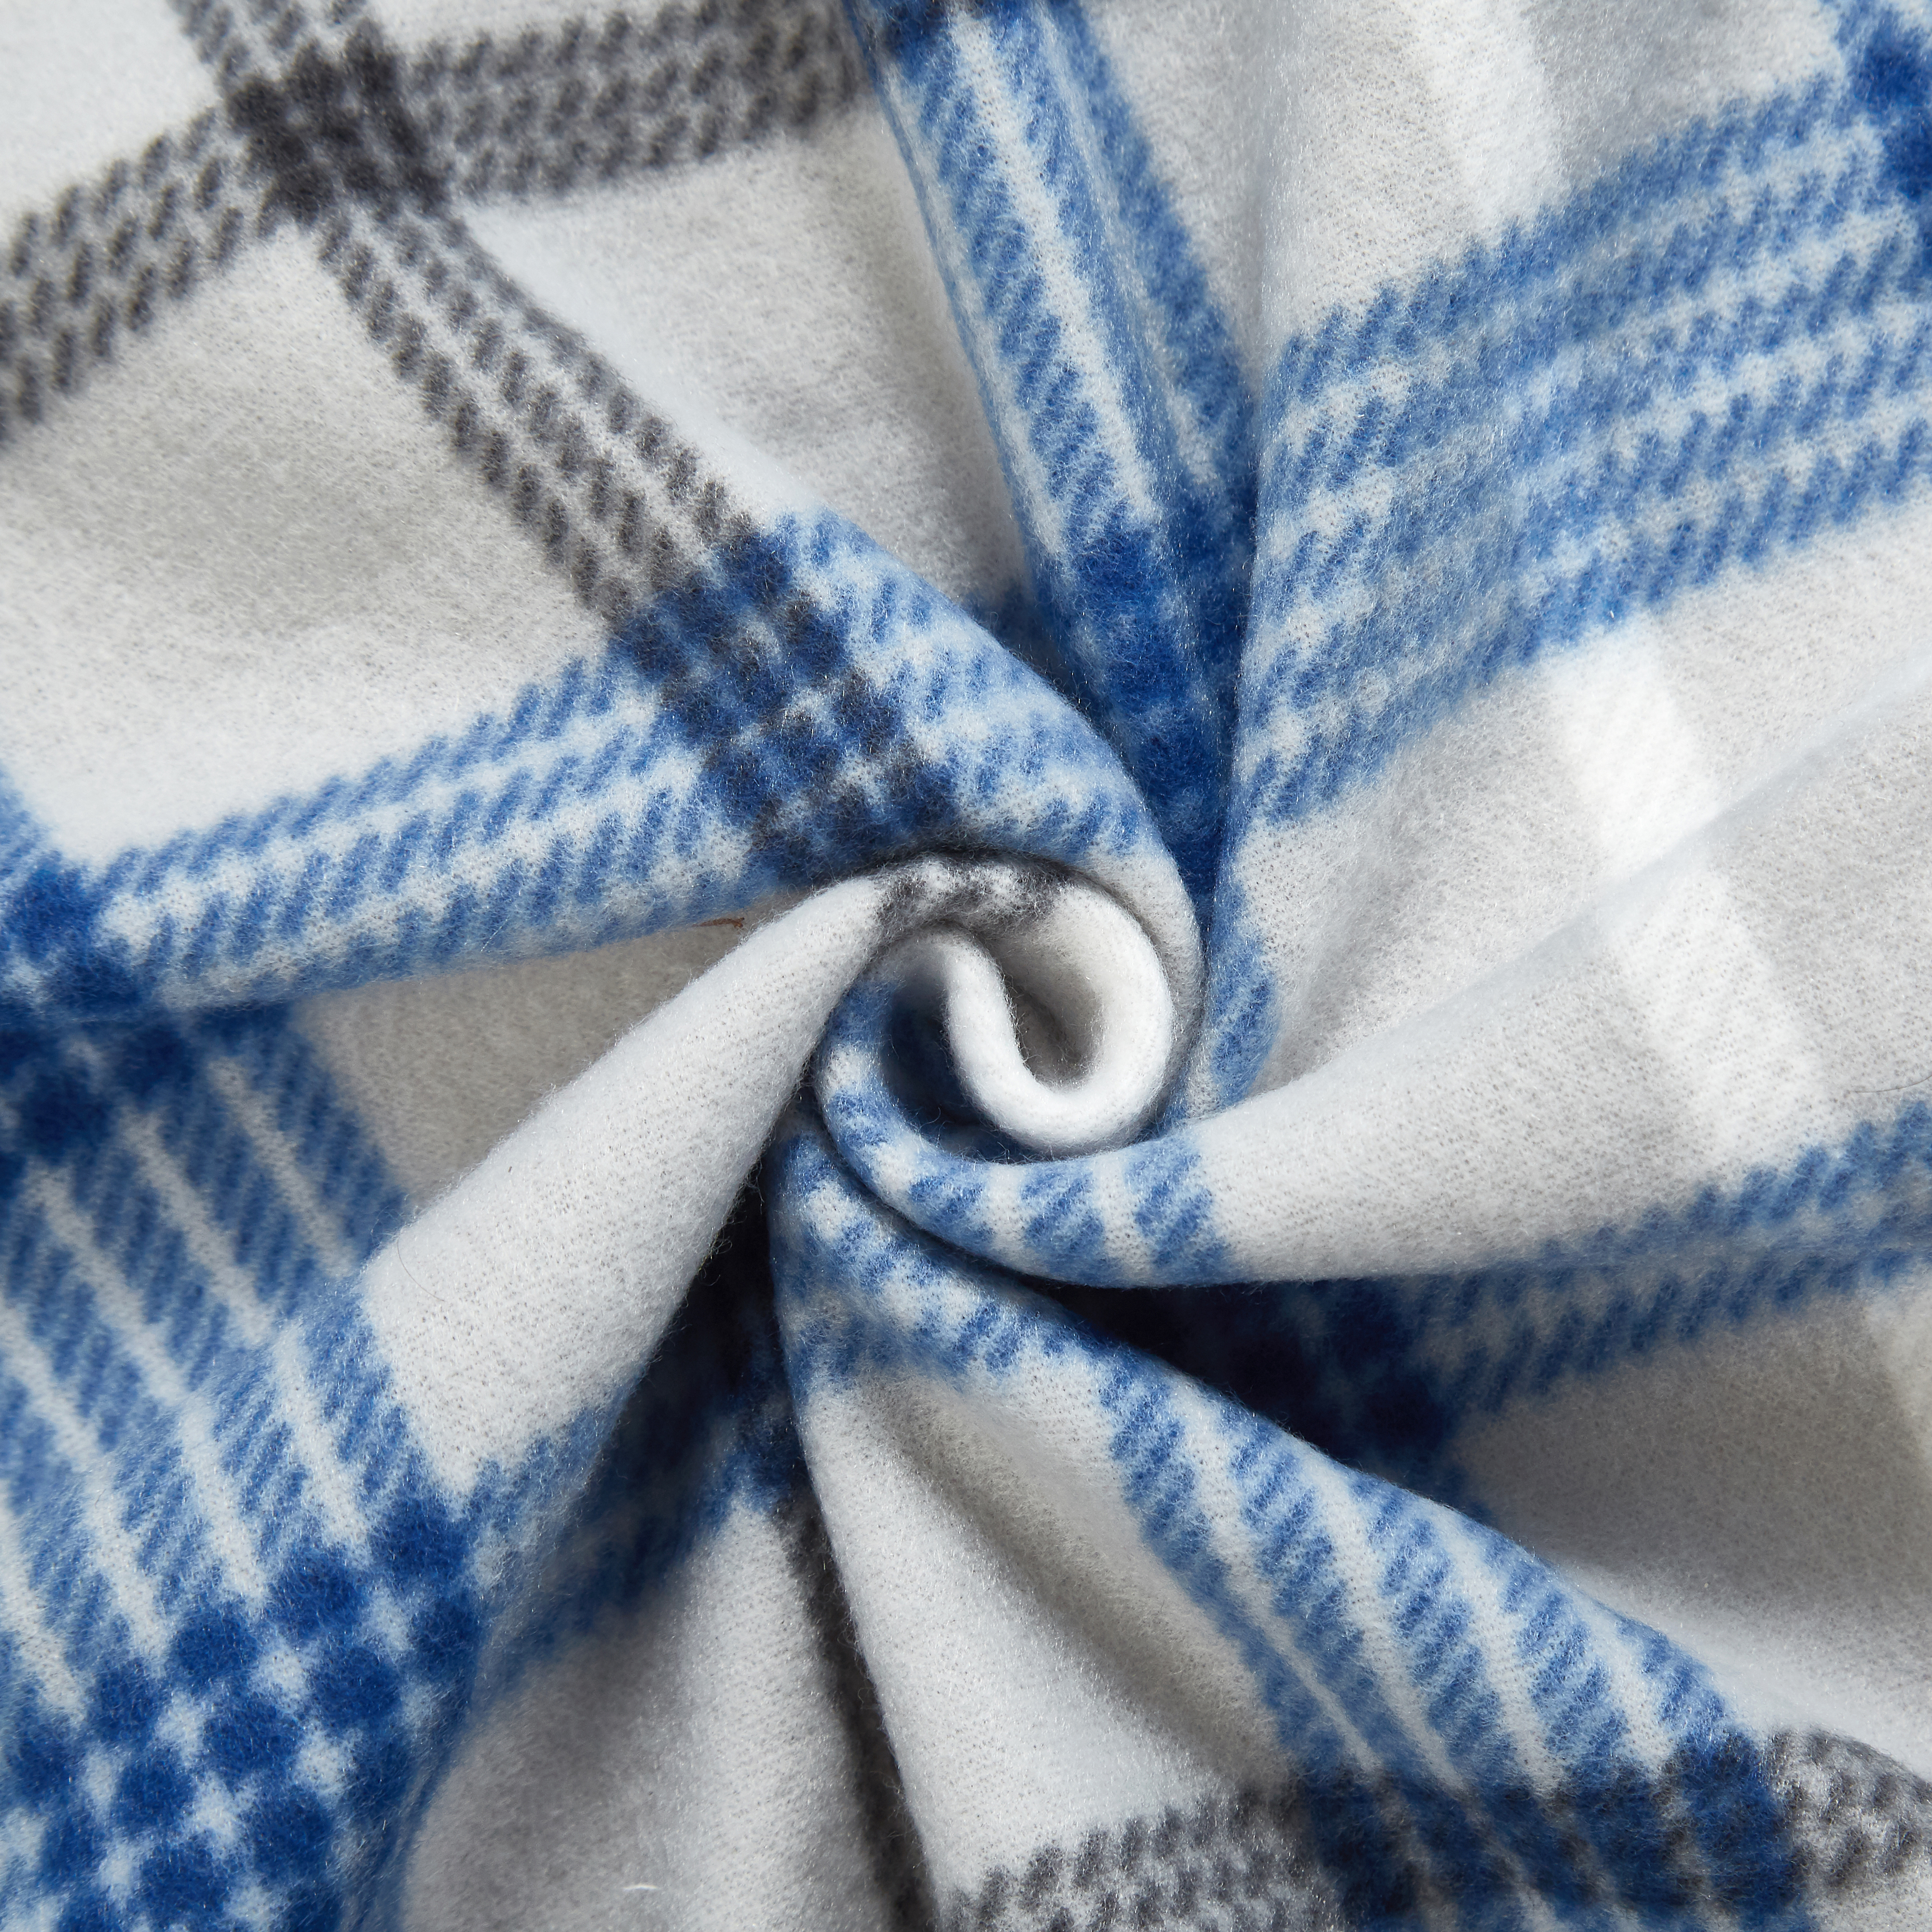 Mainstays Blue, Gray Plaid Fleece Throw, 60" x 50" - image 5 of 6